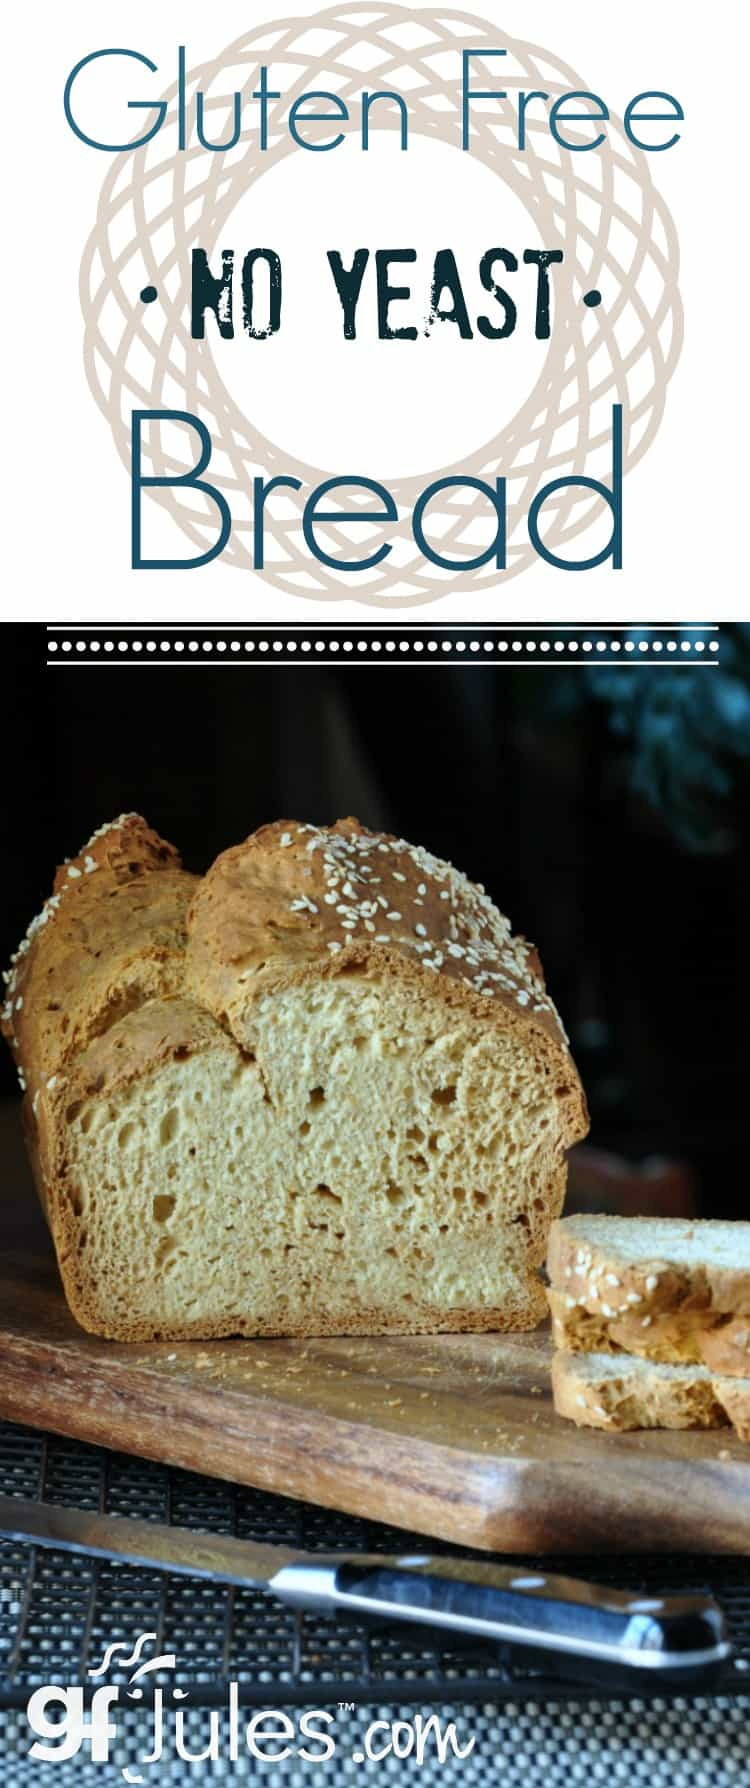 Gluten Free Bread Recipe No Yeast Beautiful Gluten Free No Yeast Bread Recipe for Sandwiches Gfjules